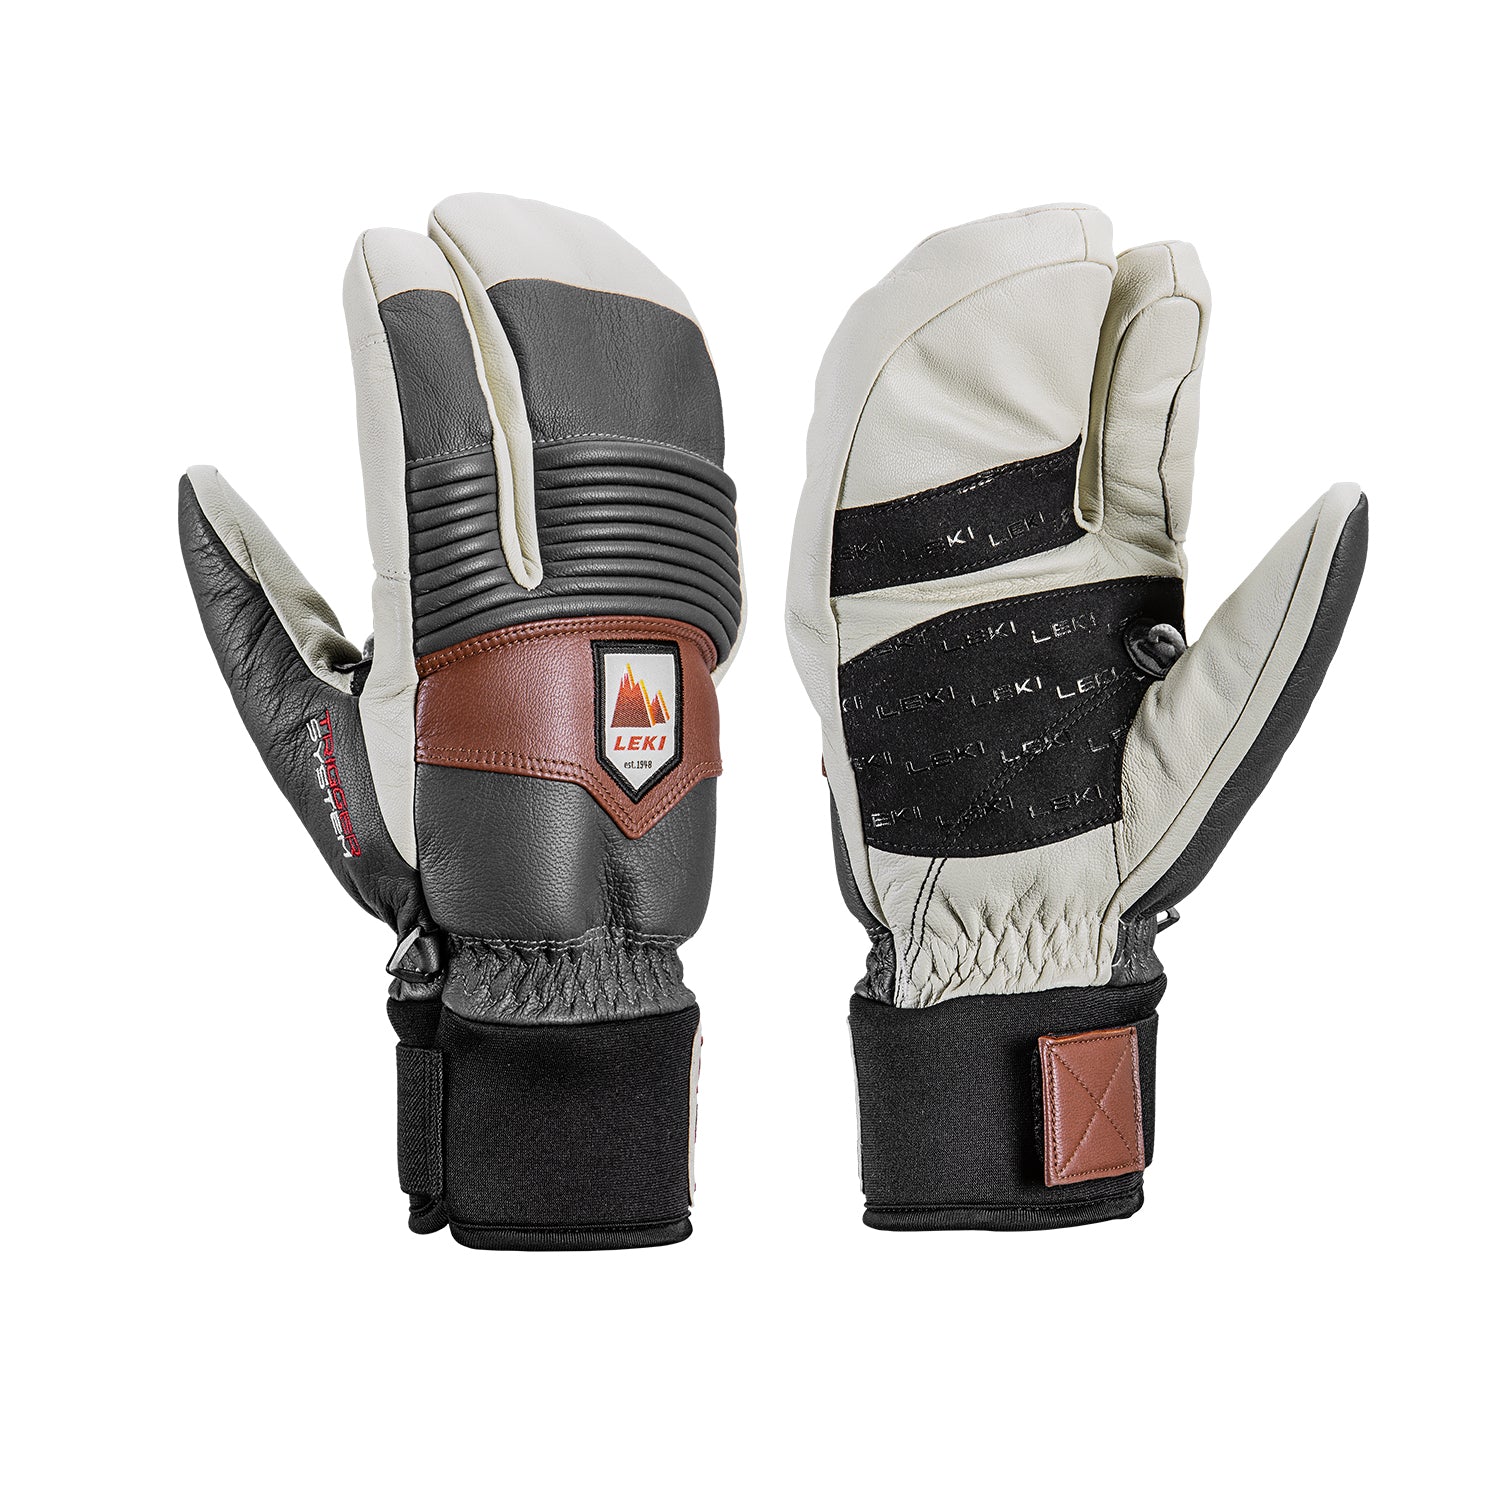 LEKI USA - Patrol 3D Lobster - Alpine Ski Gloves - Alpine Skiing